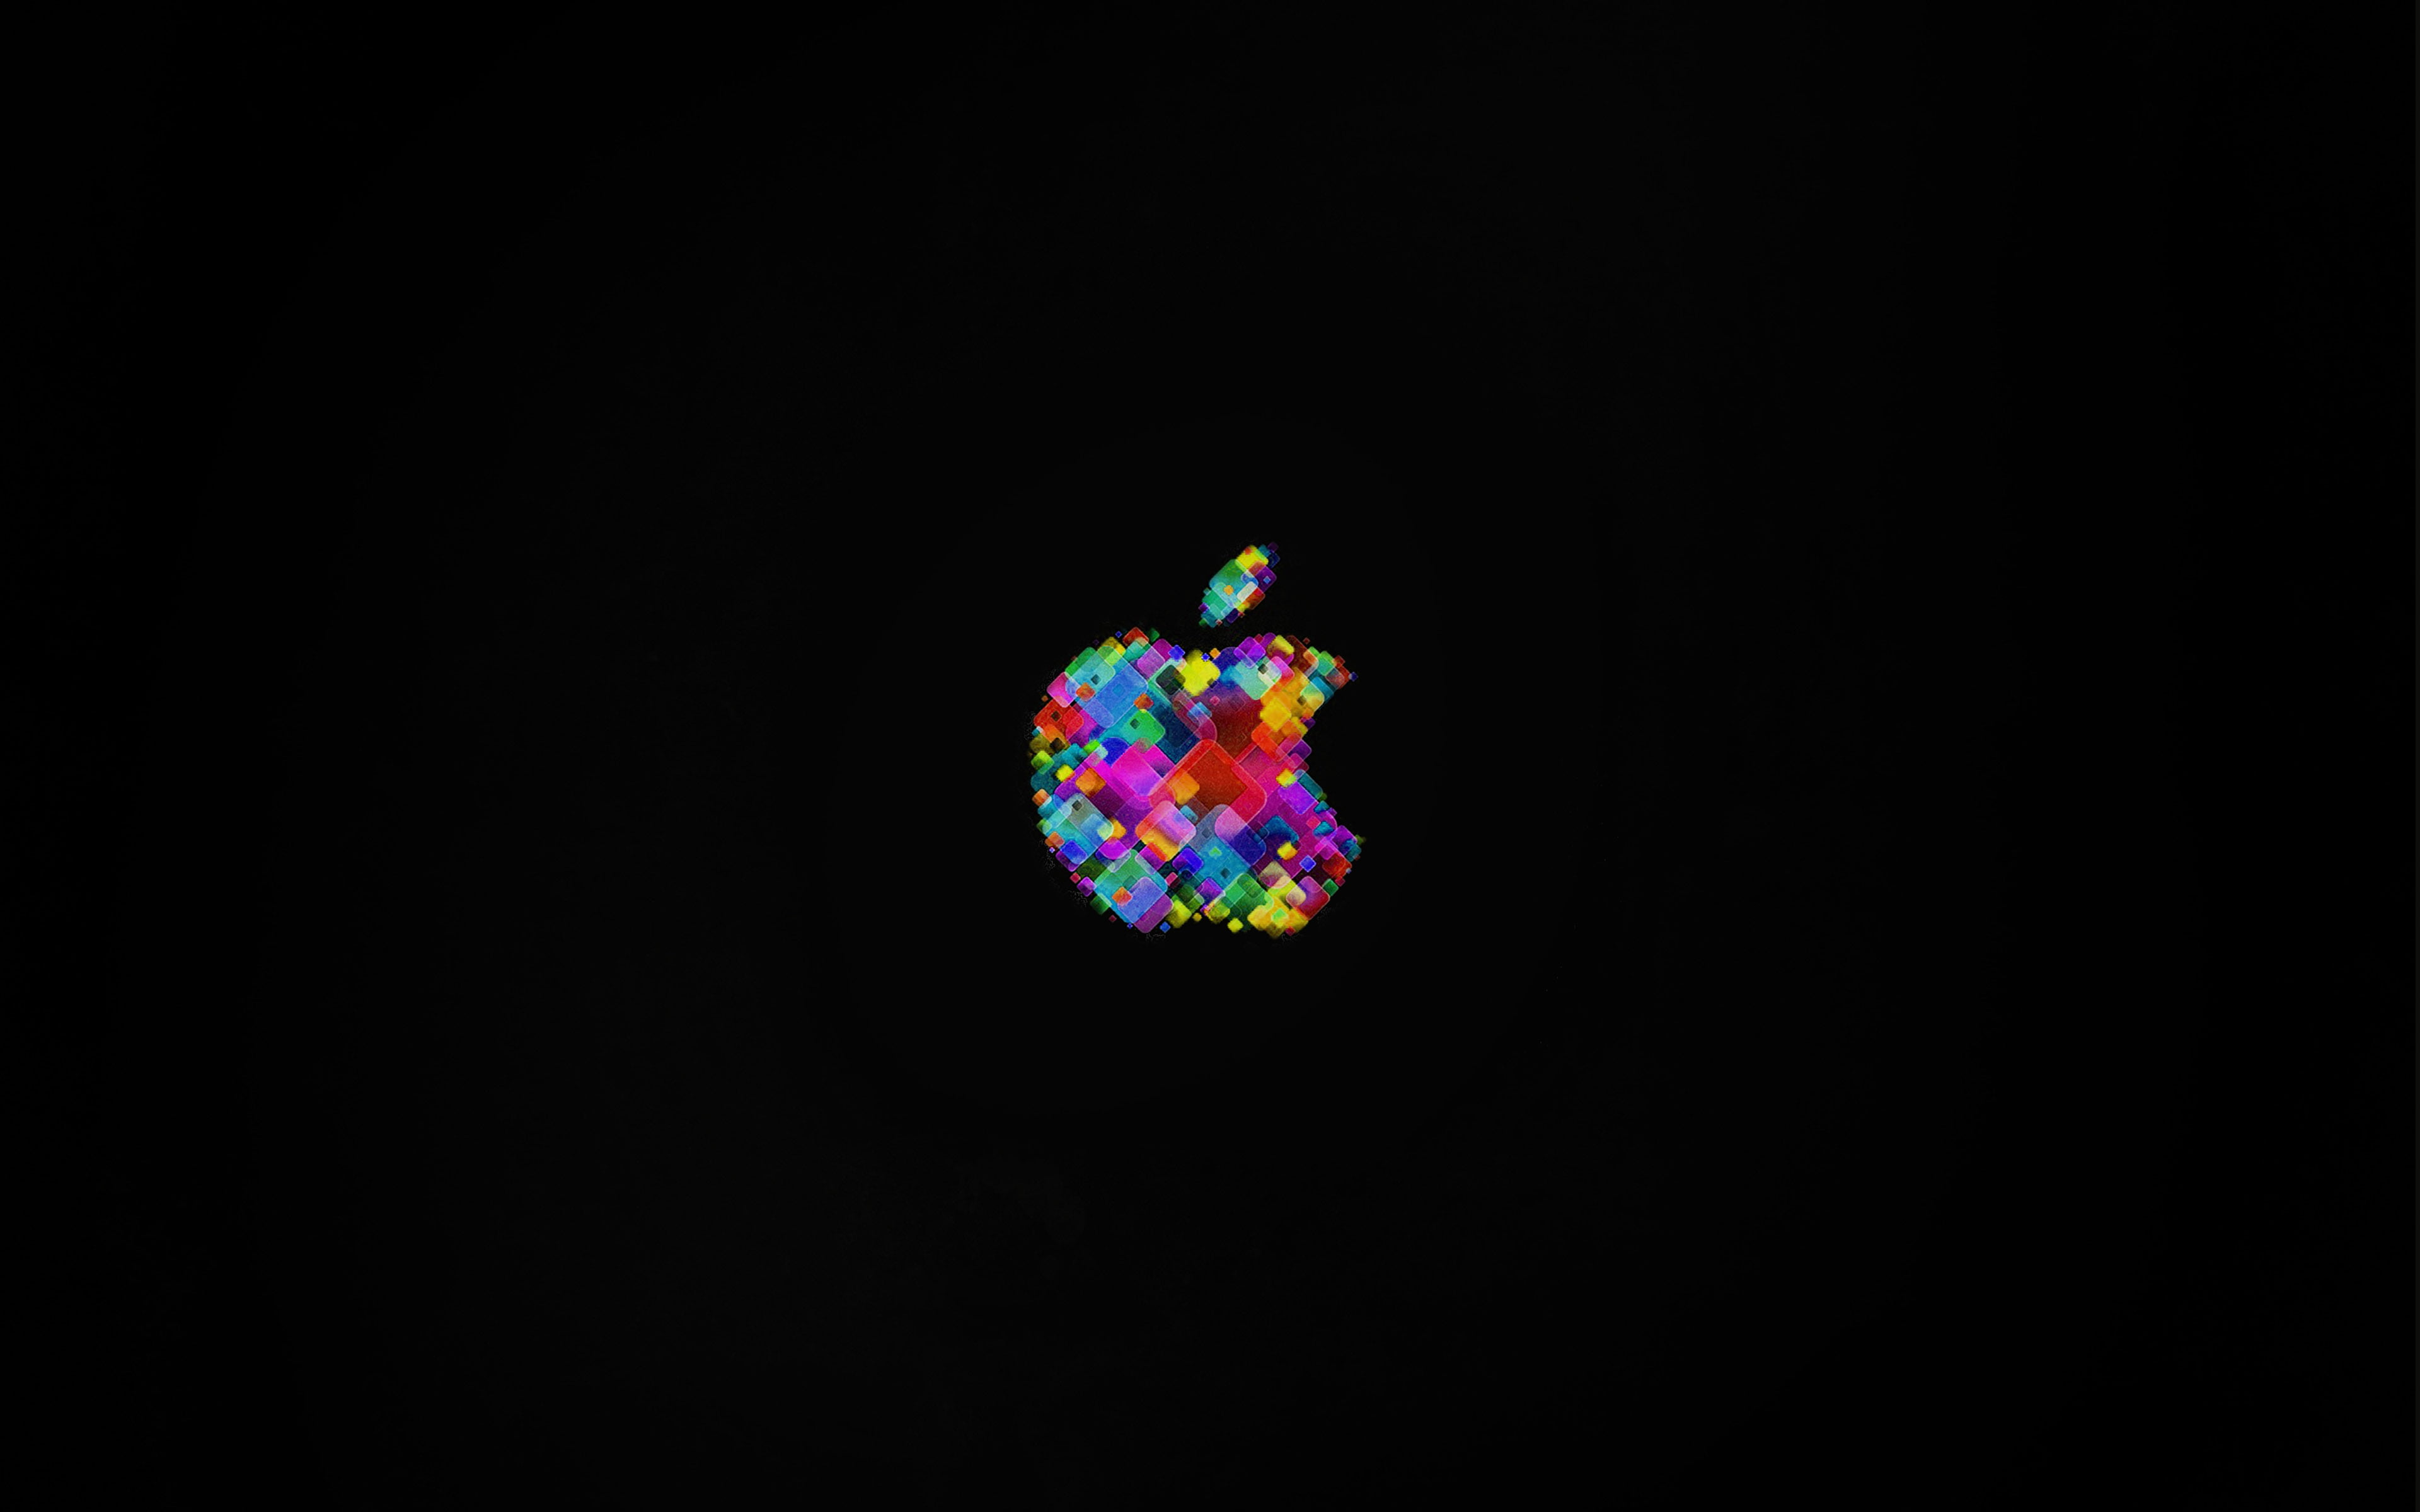 apple, event, logo, art, dark, minimal, studio shot, black background